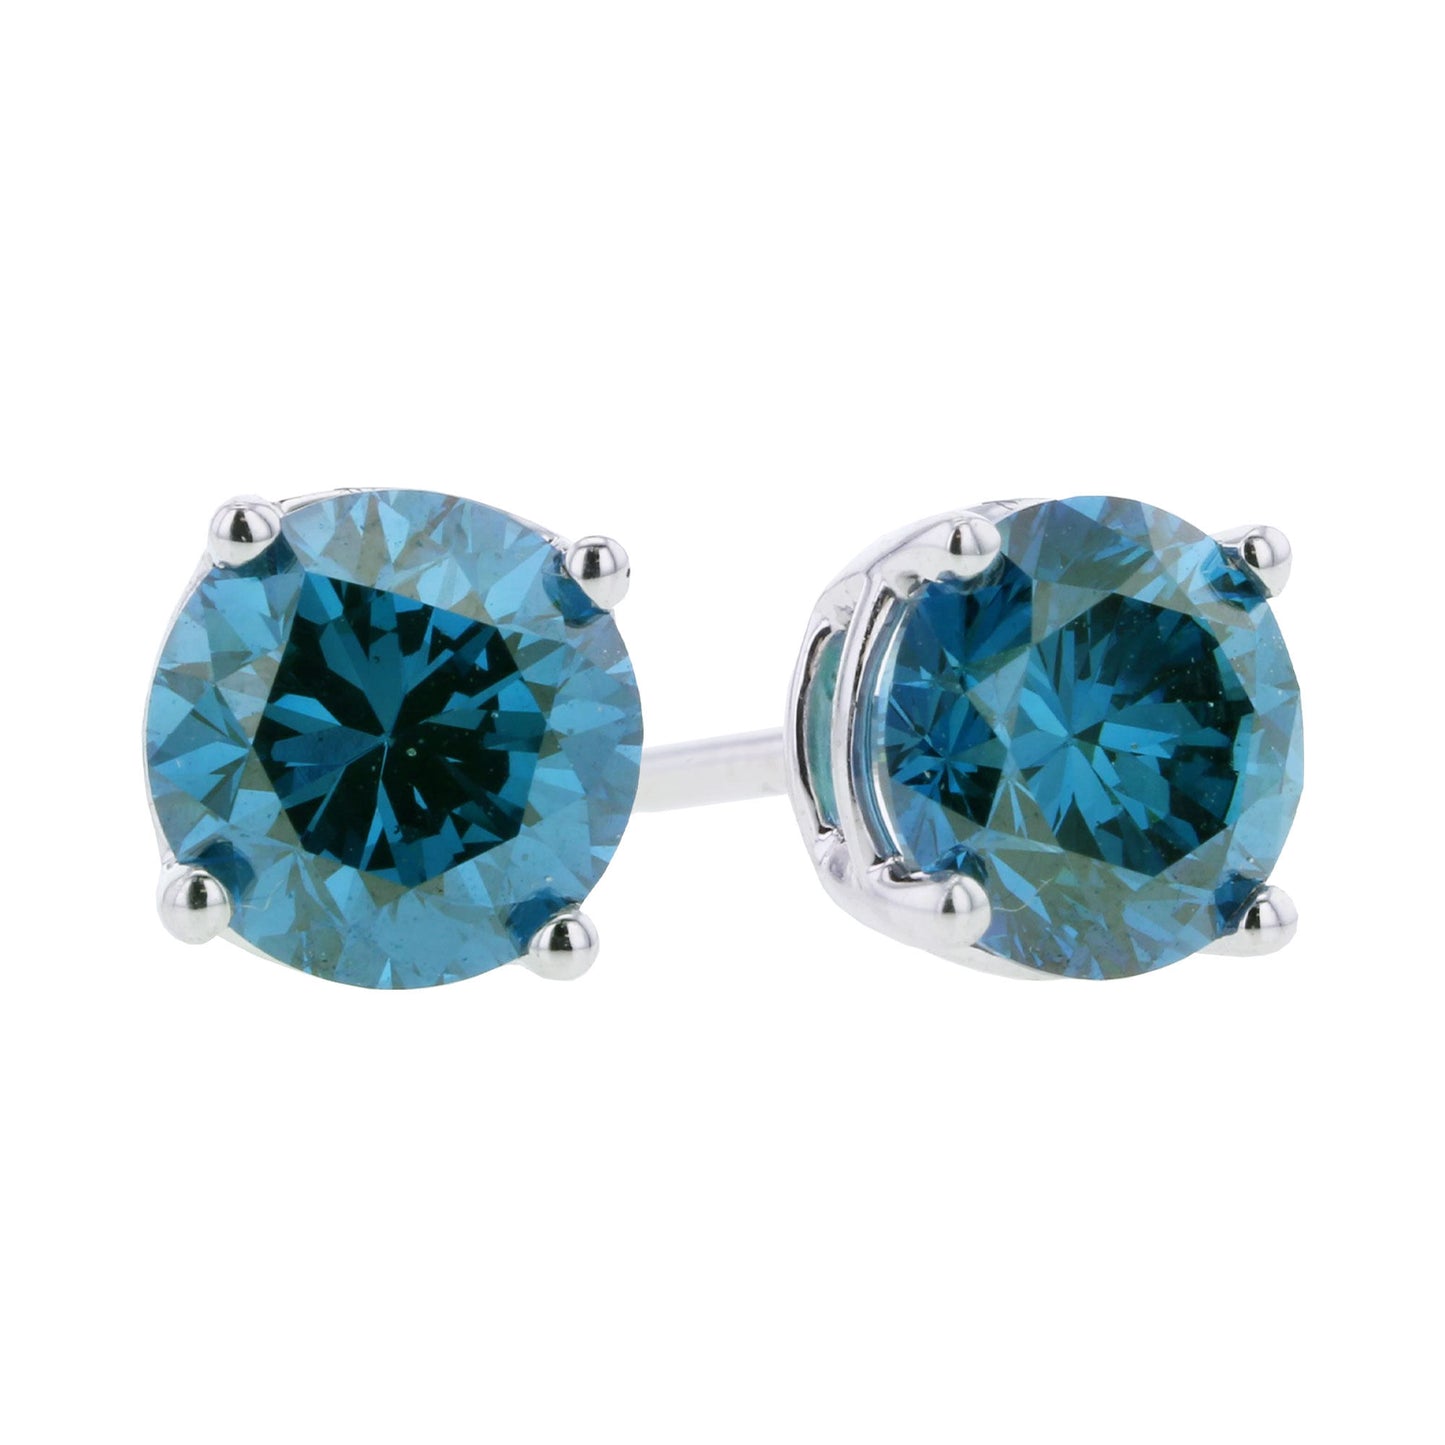 Our beautiful half carat blue sapphire diamond studs .